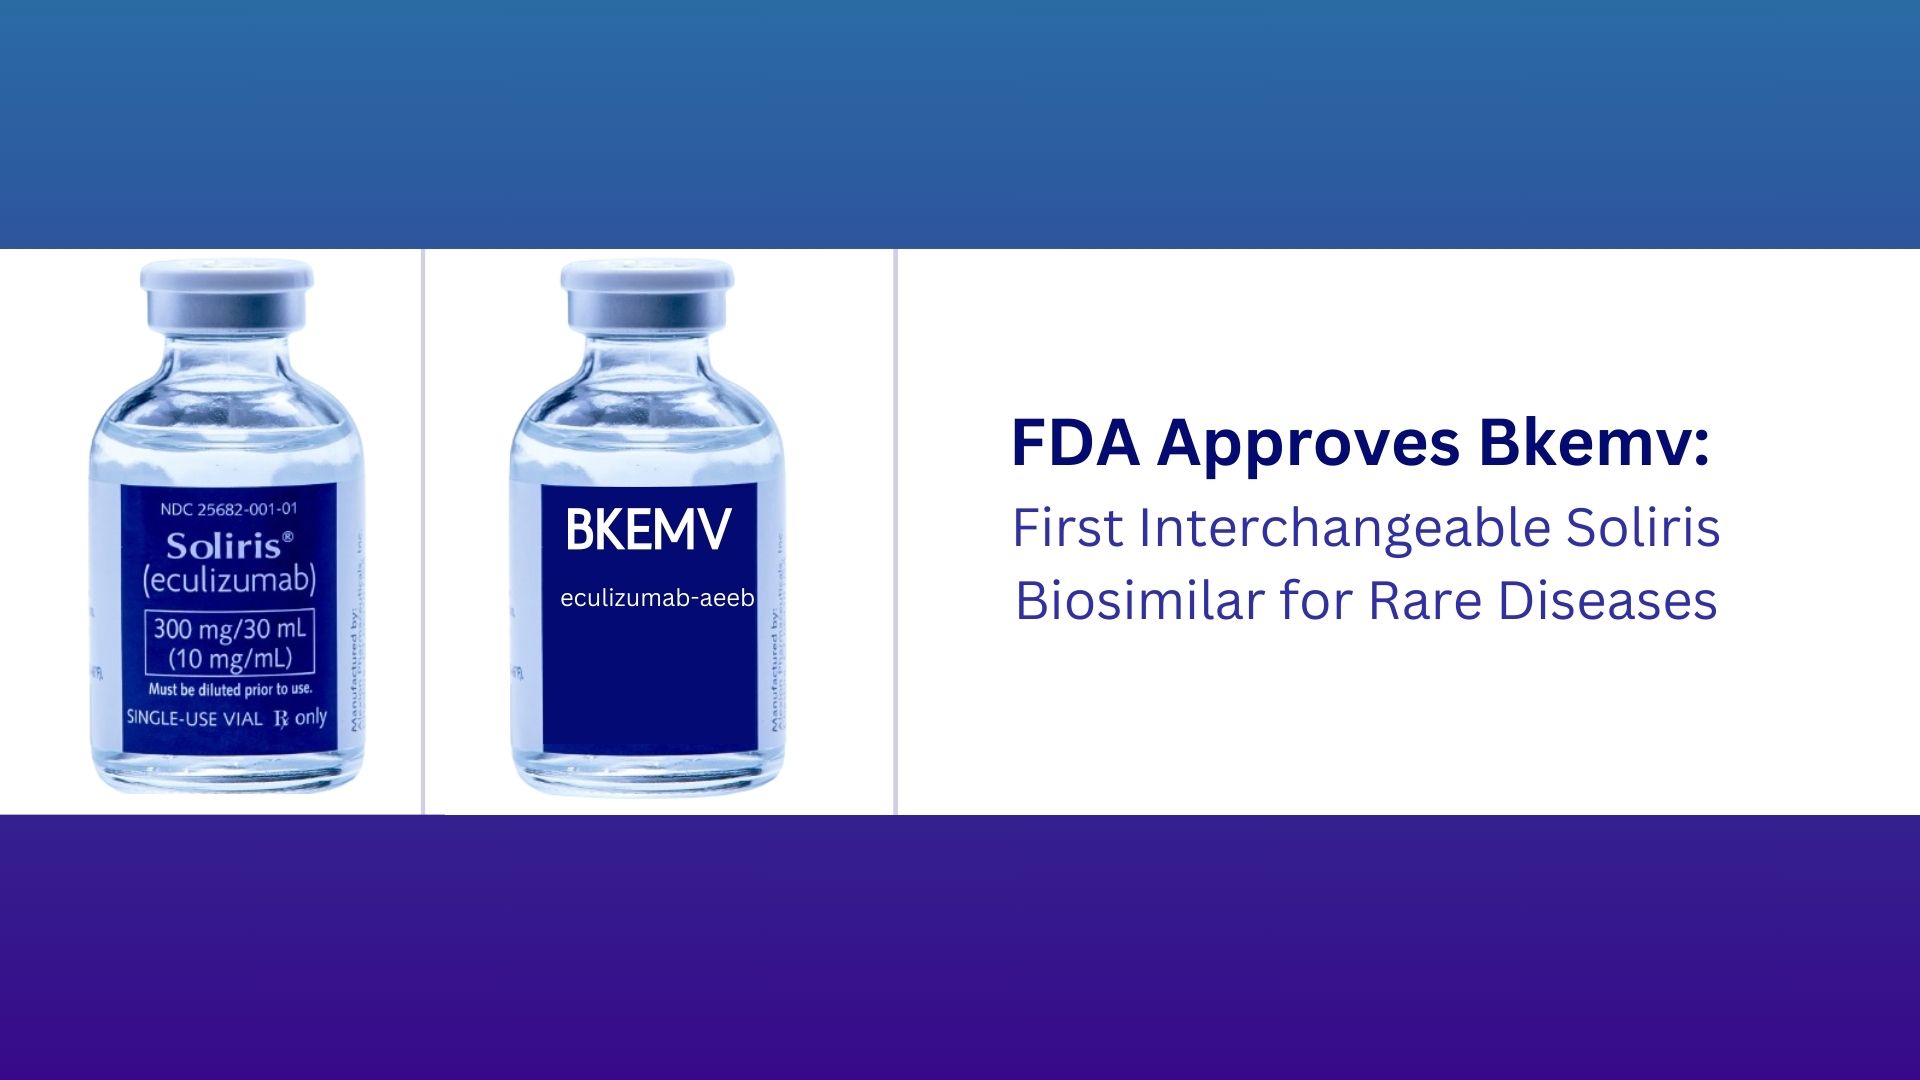 FDA Approves Bkemv